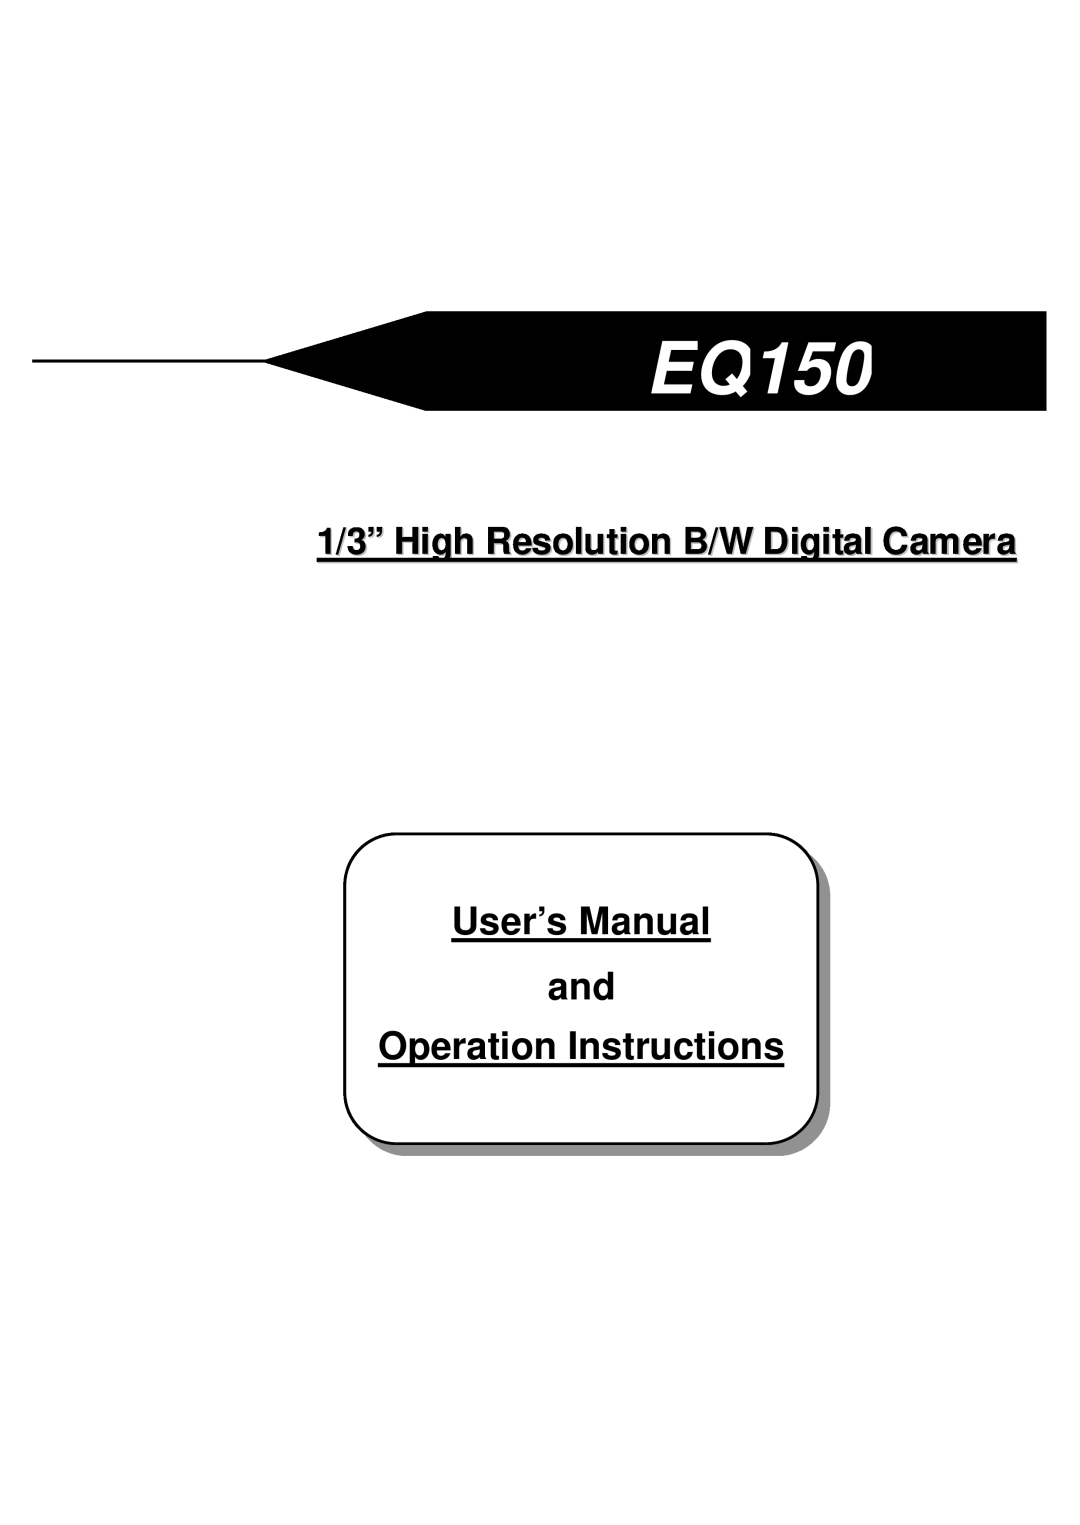 EverFocus EQ150 user manual User’s Manual and Operation Instructions, 1/3” High Resolution B/W Digital Camera 